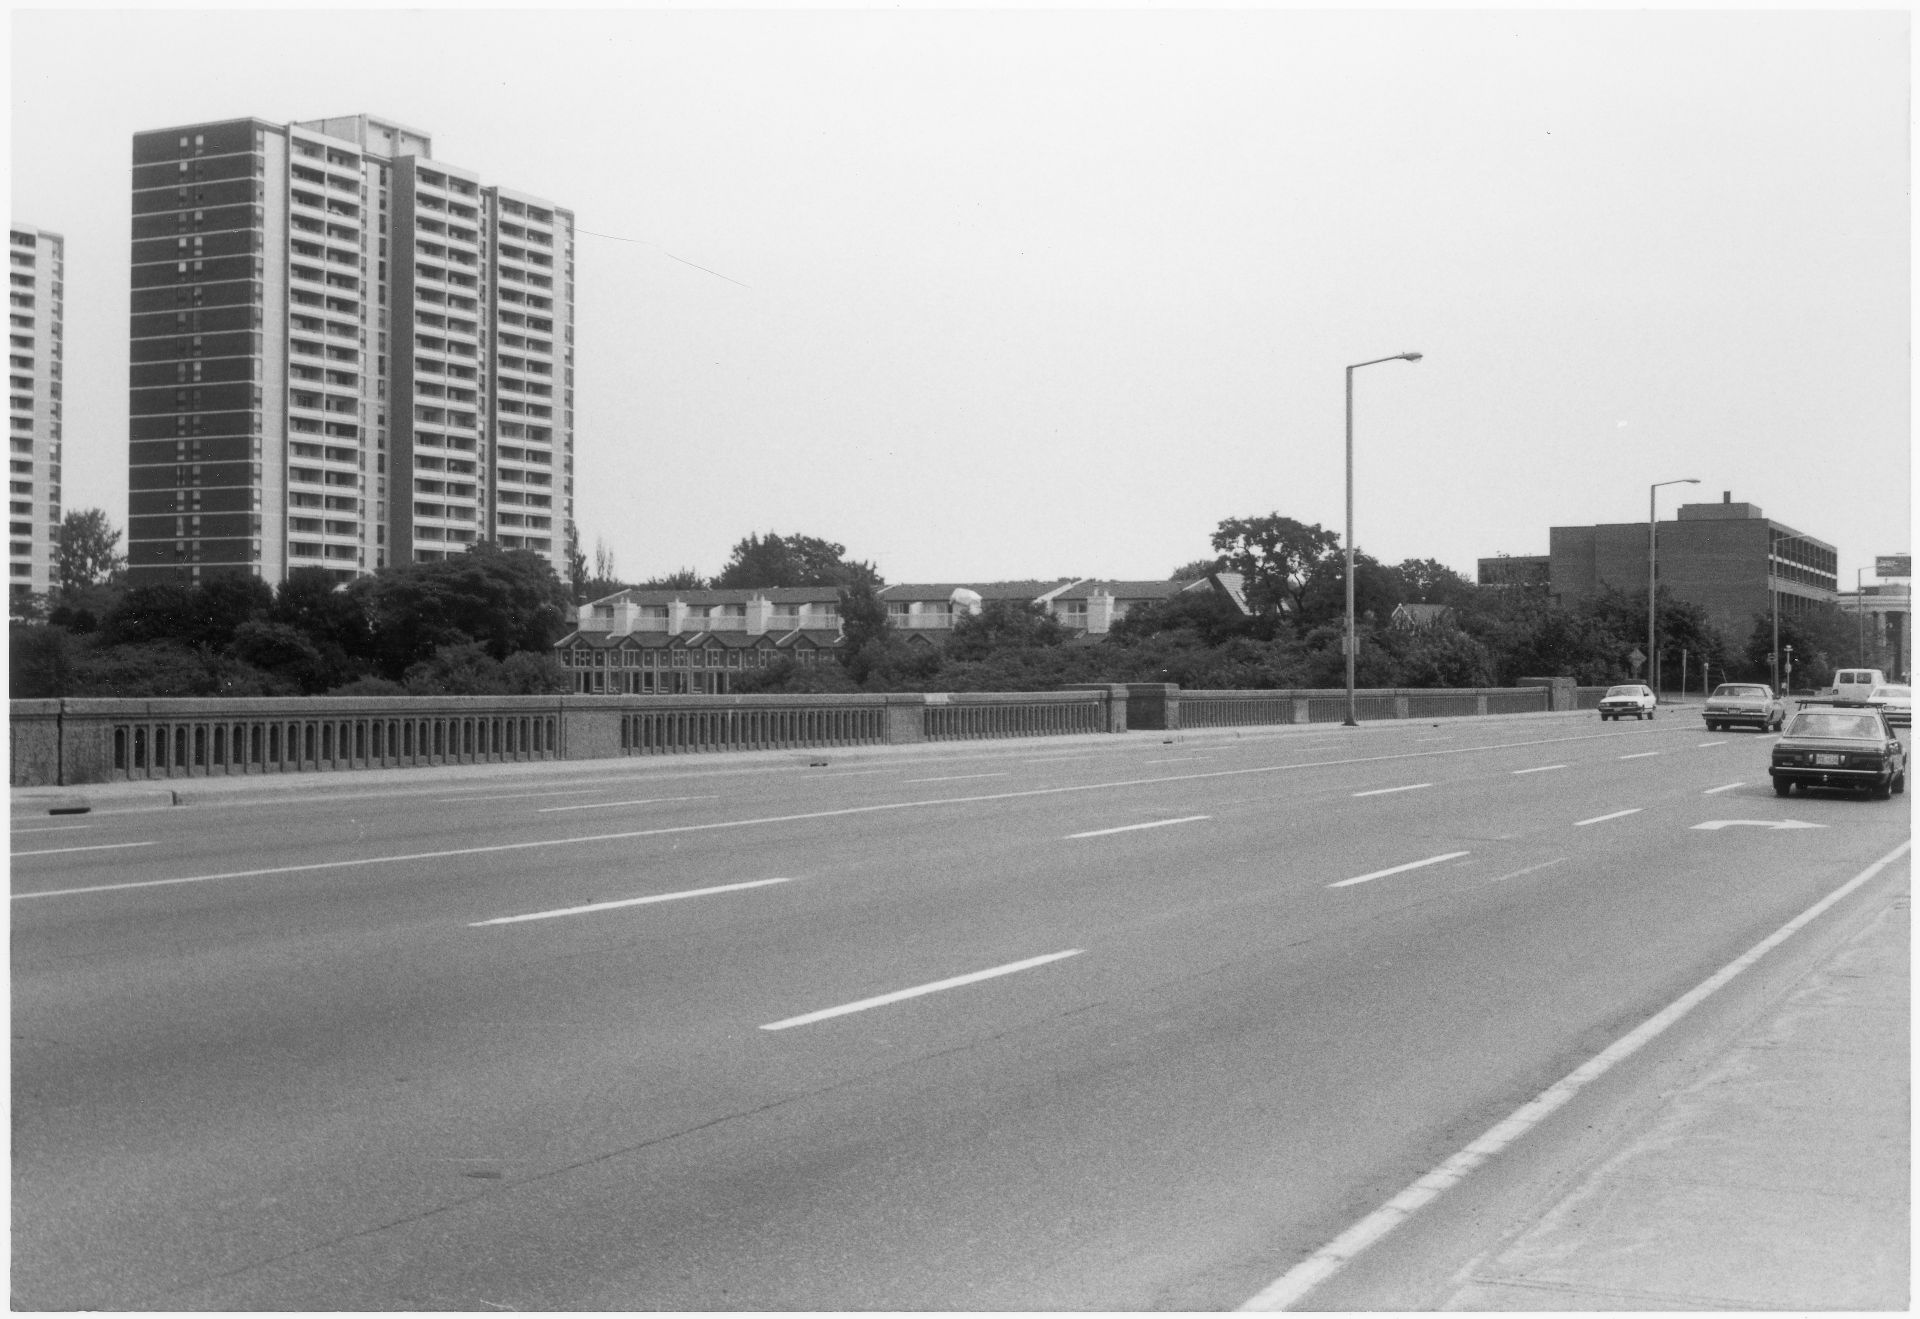 Street View of the Bloor Street Bridge in 1984. City of Toronto Archives, Fonds 268, File 6, Item 35.